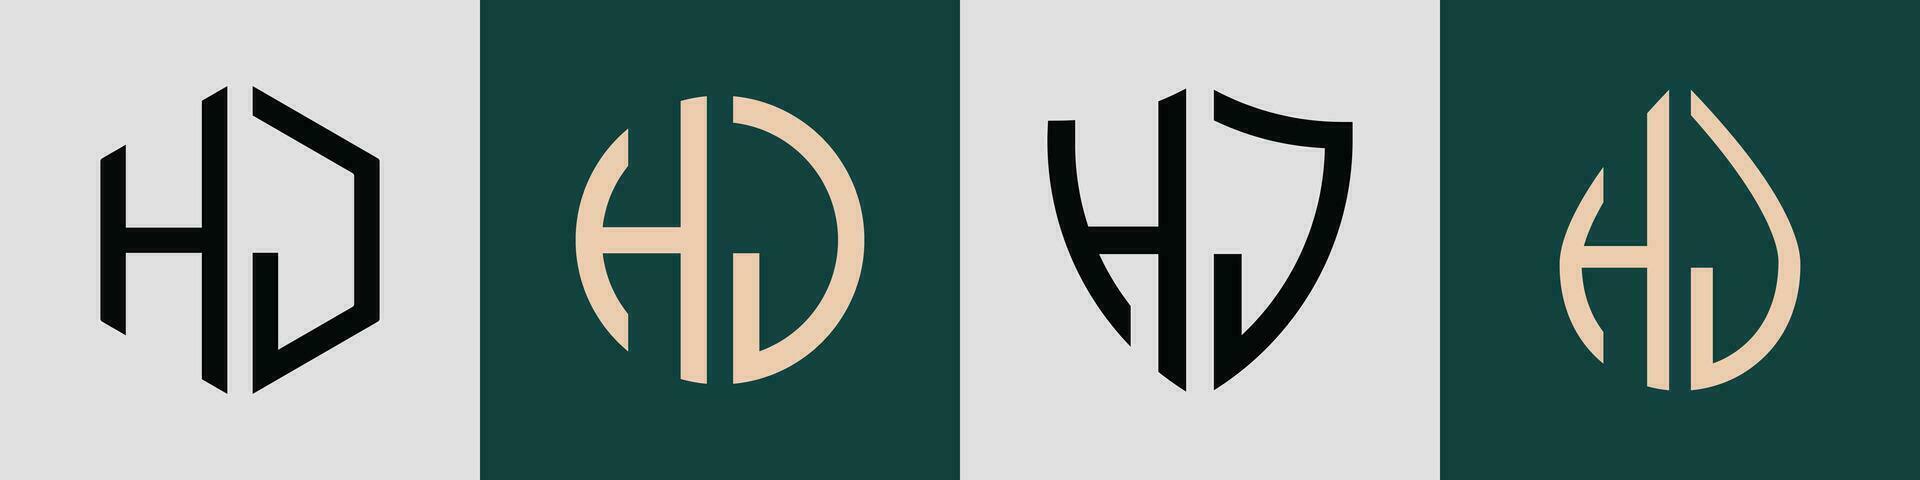 kreativ einfach Initiale Briefe hj Logo Designs bündeln. vektor